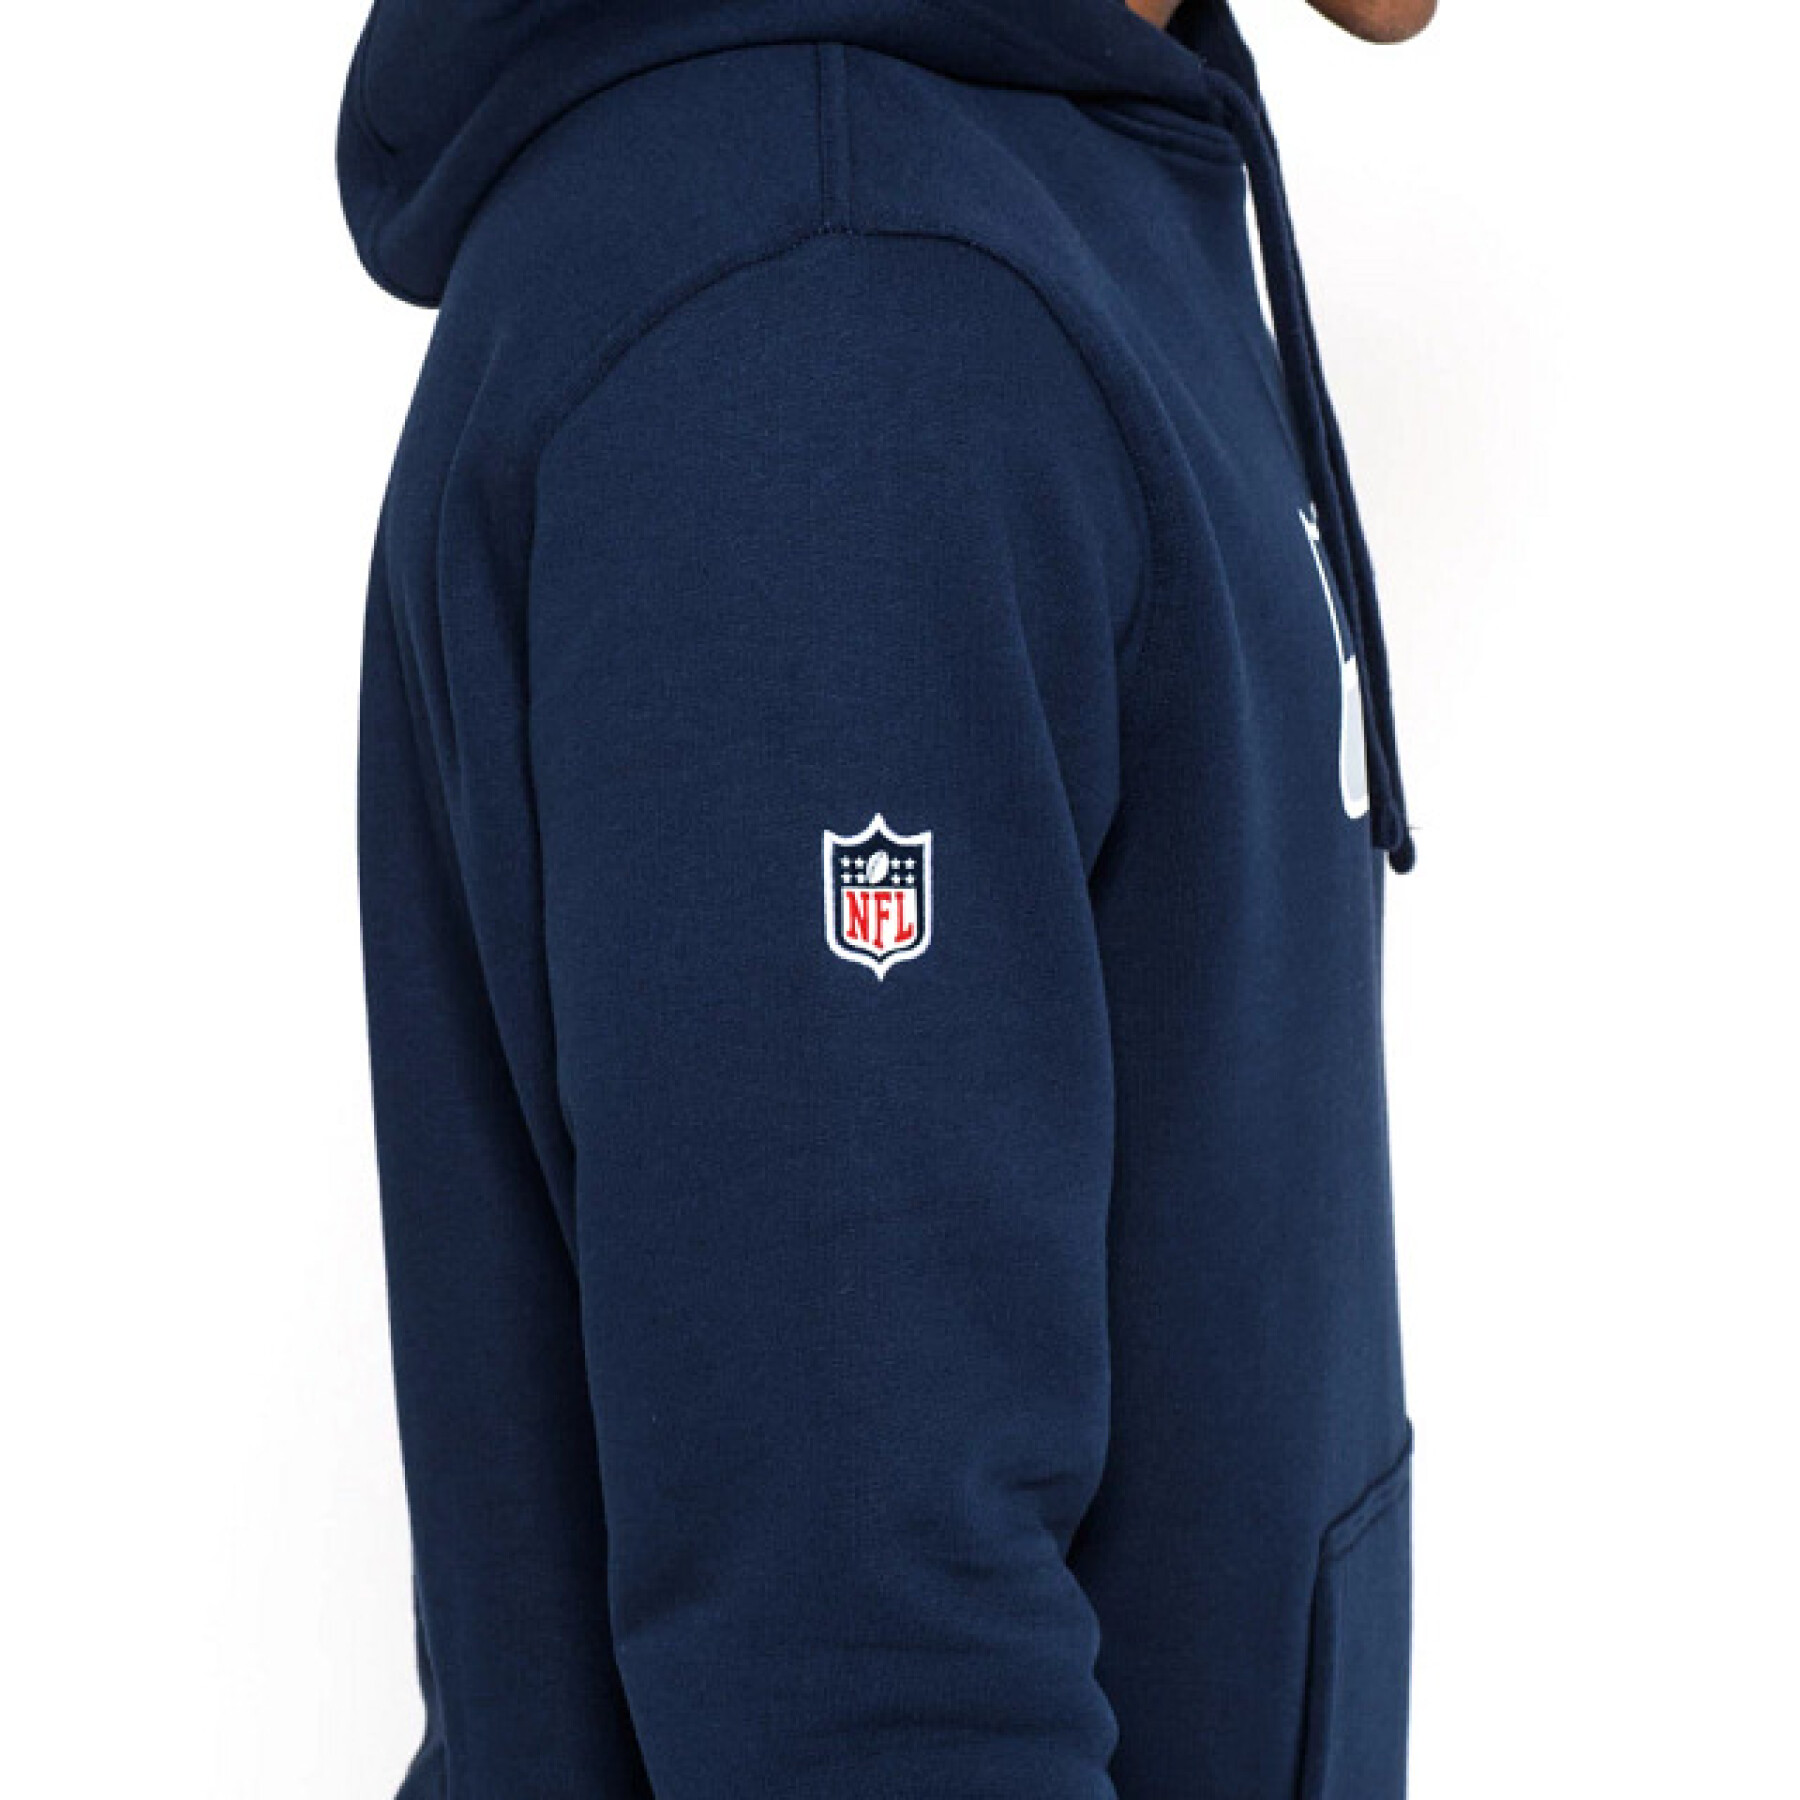 Sweatshirt à capuche Seahawks NFL